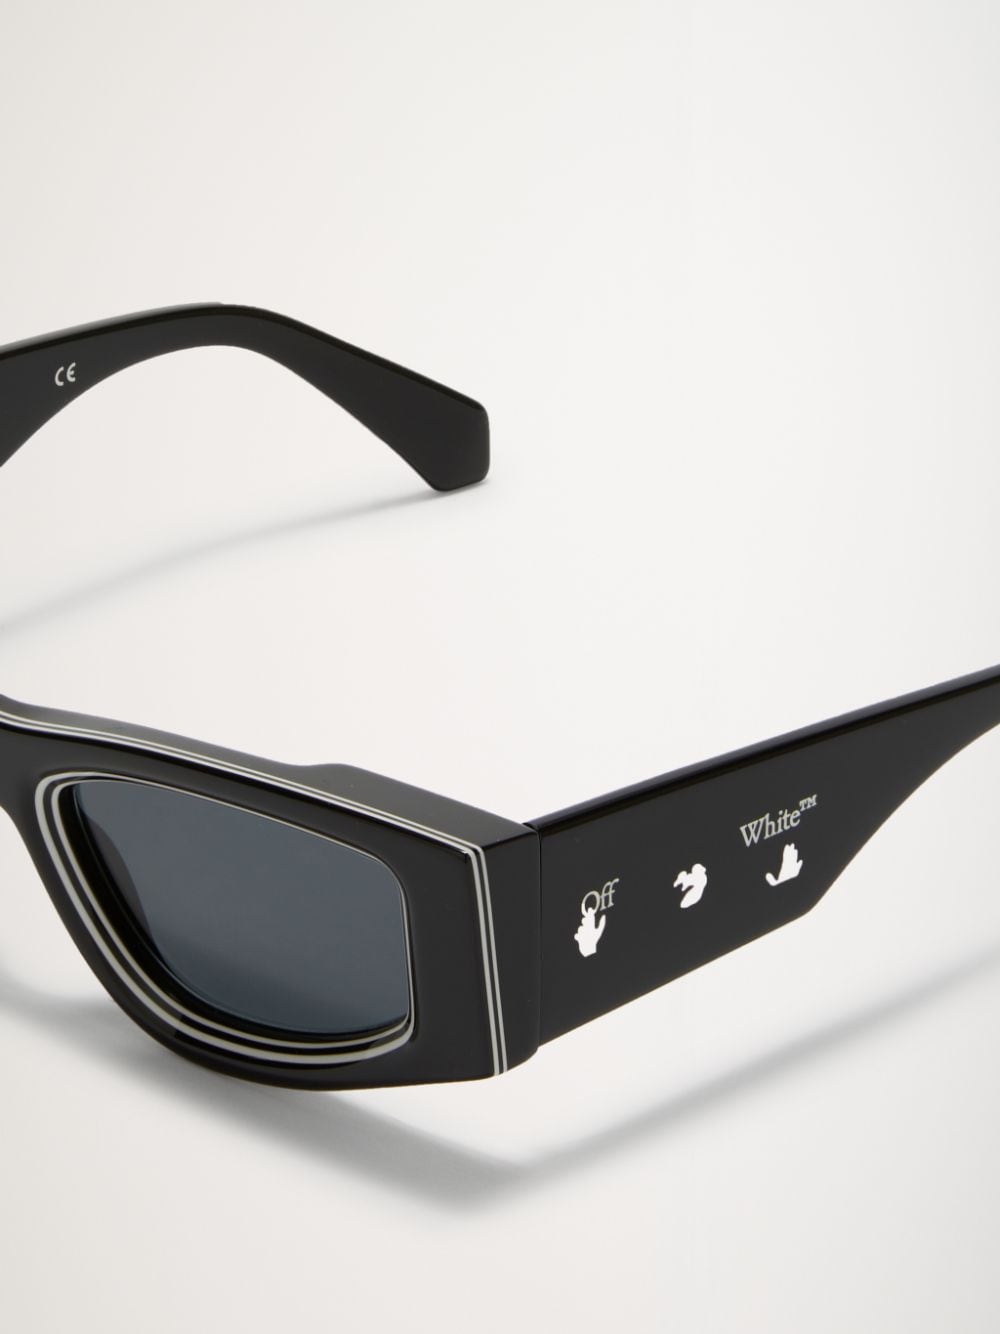 Andy square-frame sunglasses